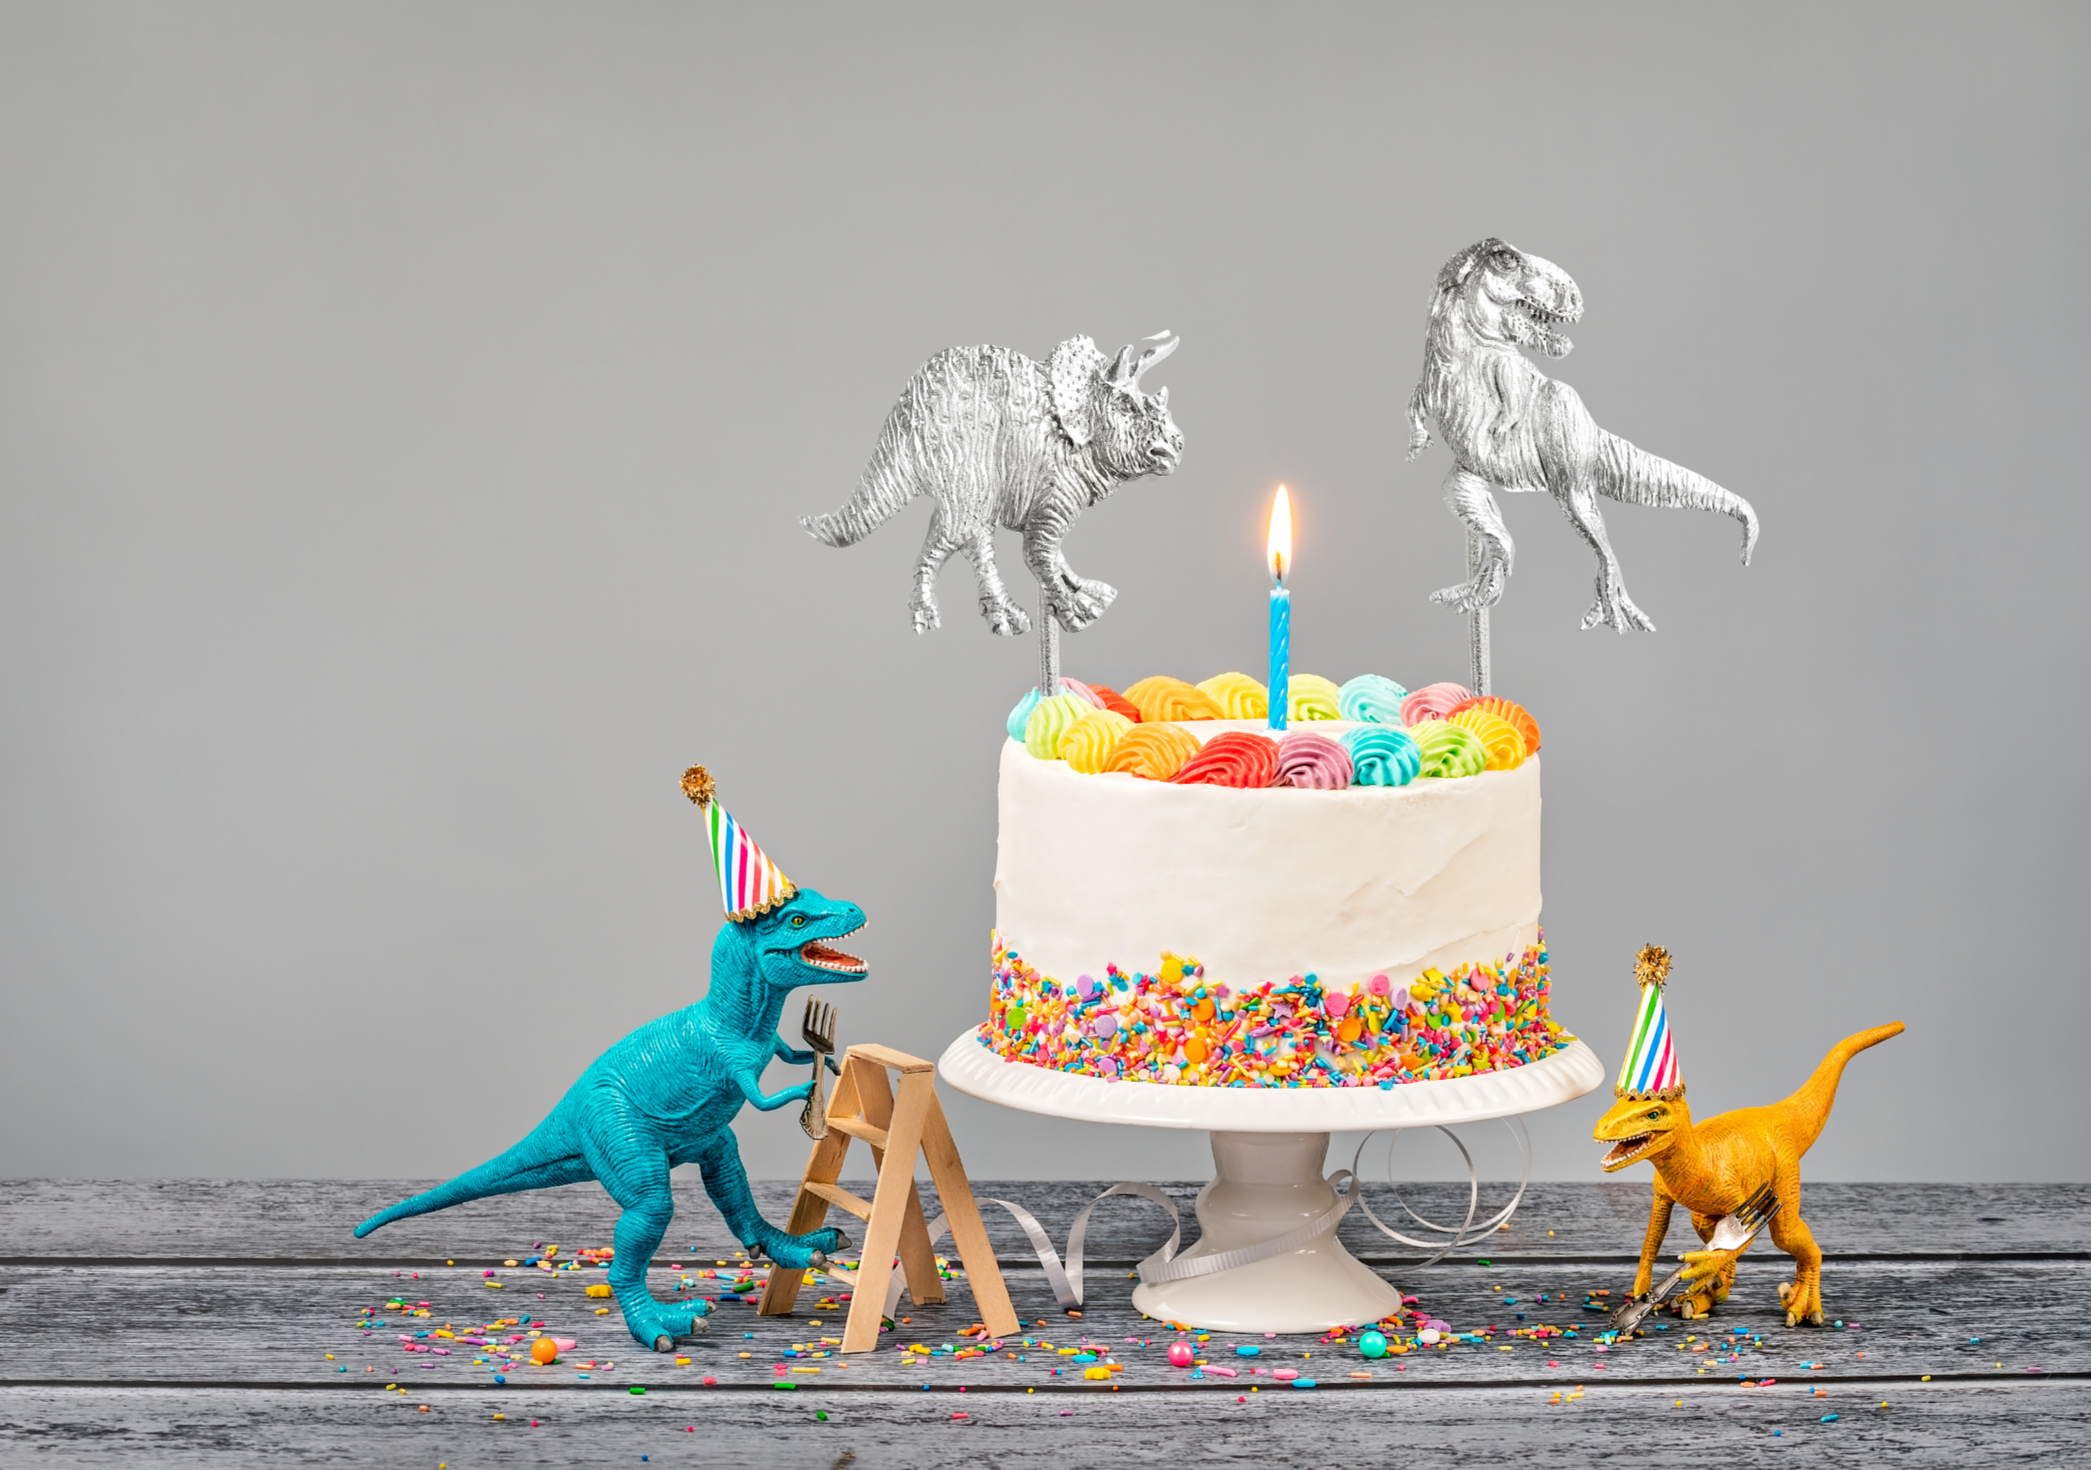 pokemon cake toppers edible Pikacu Fondant decorations Kids birthday Cake |  eBay